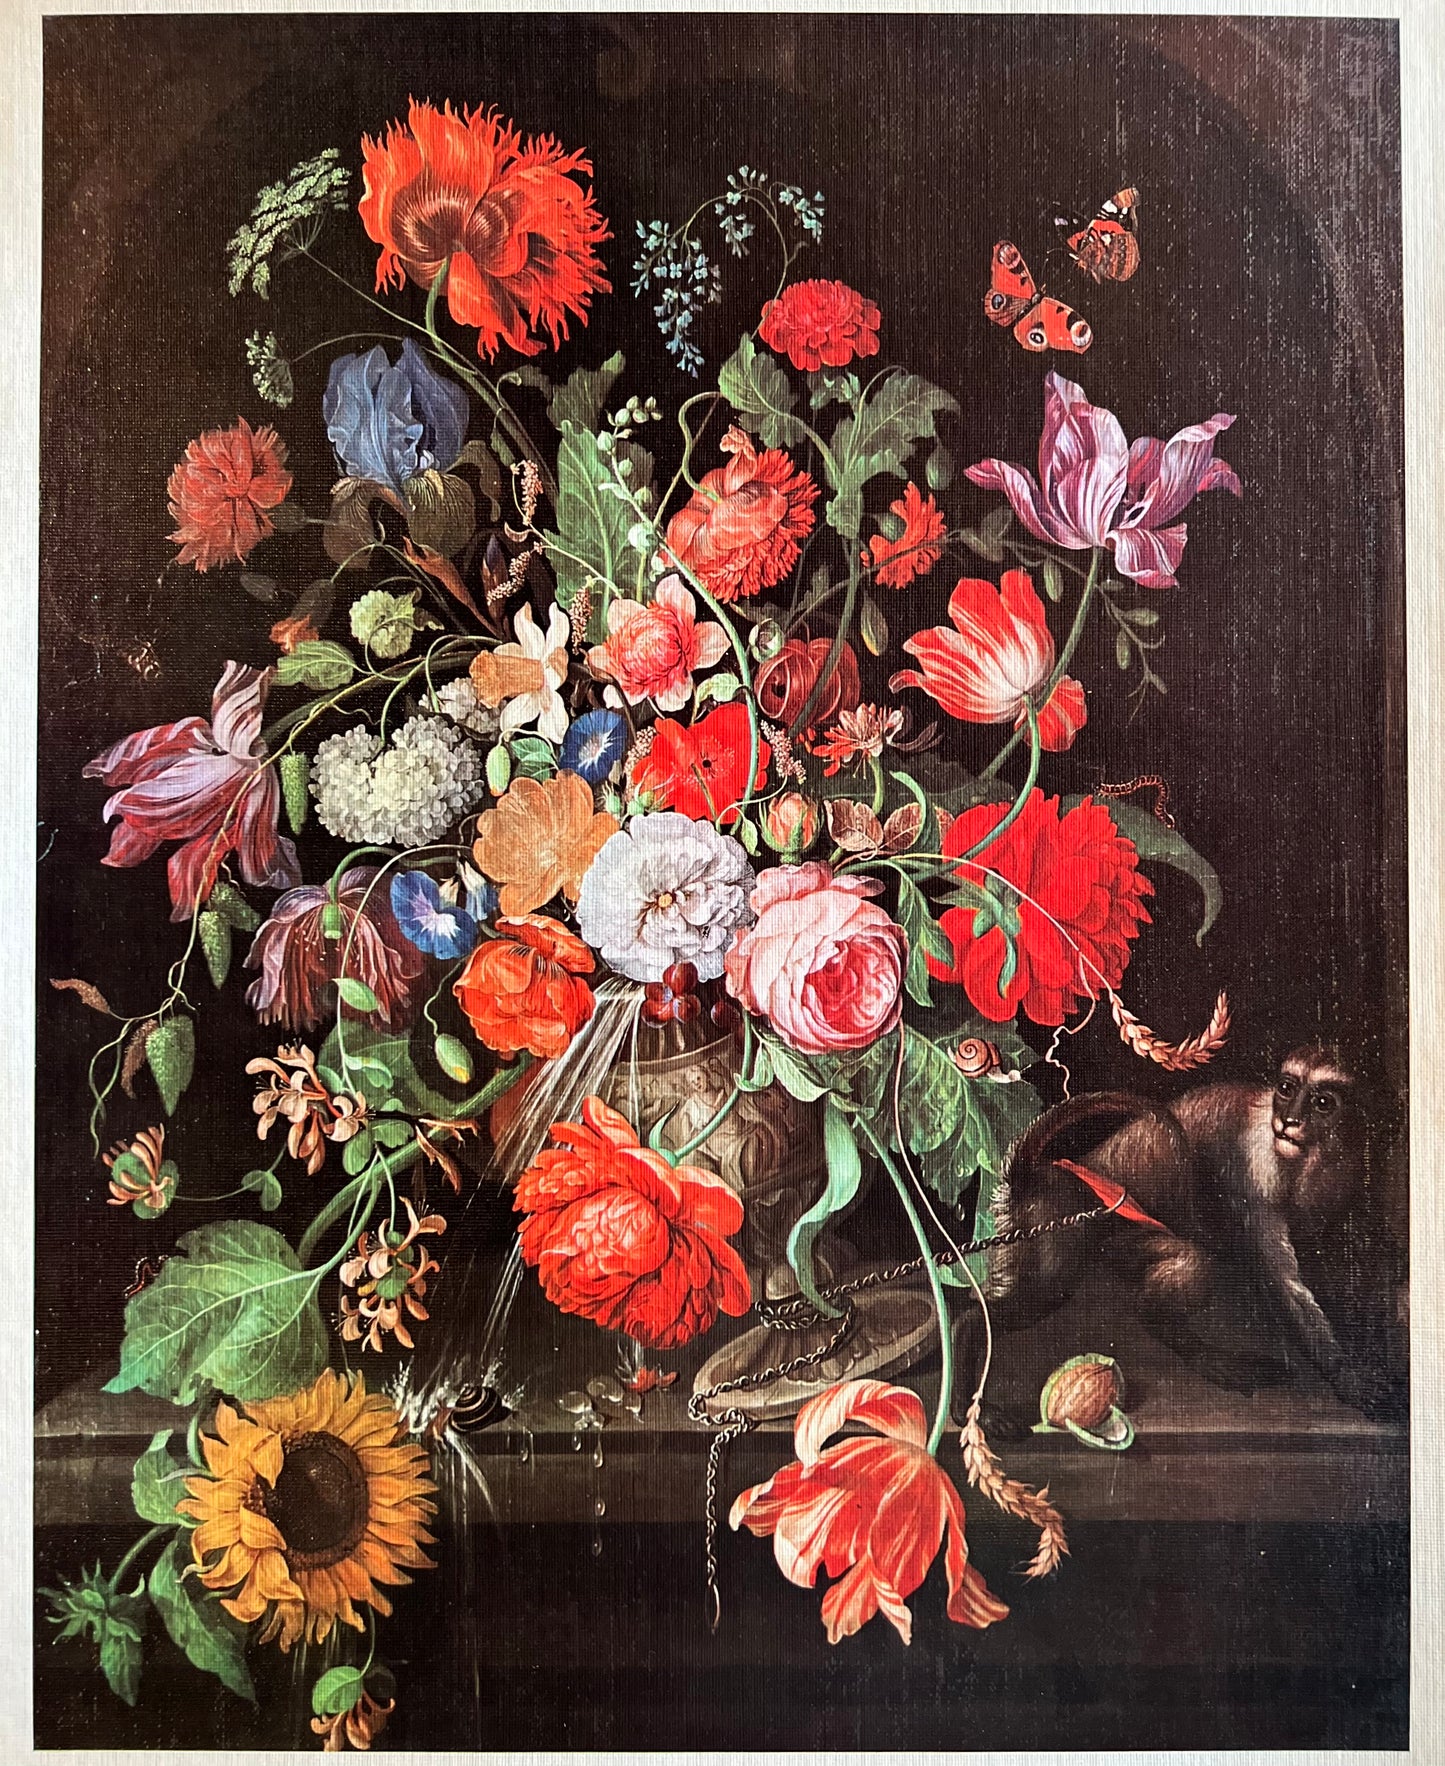 "Fiori", after Abraham Mignon, print on canvas